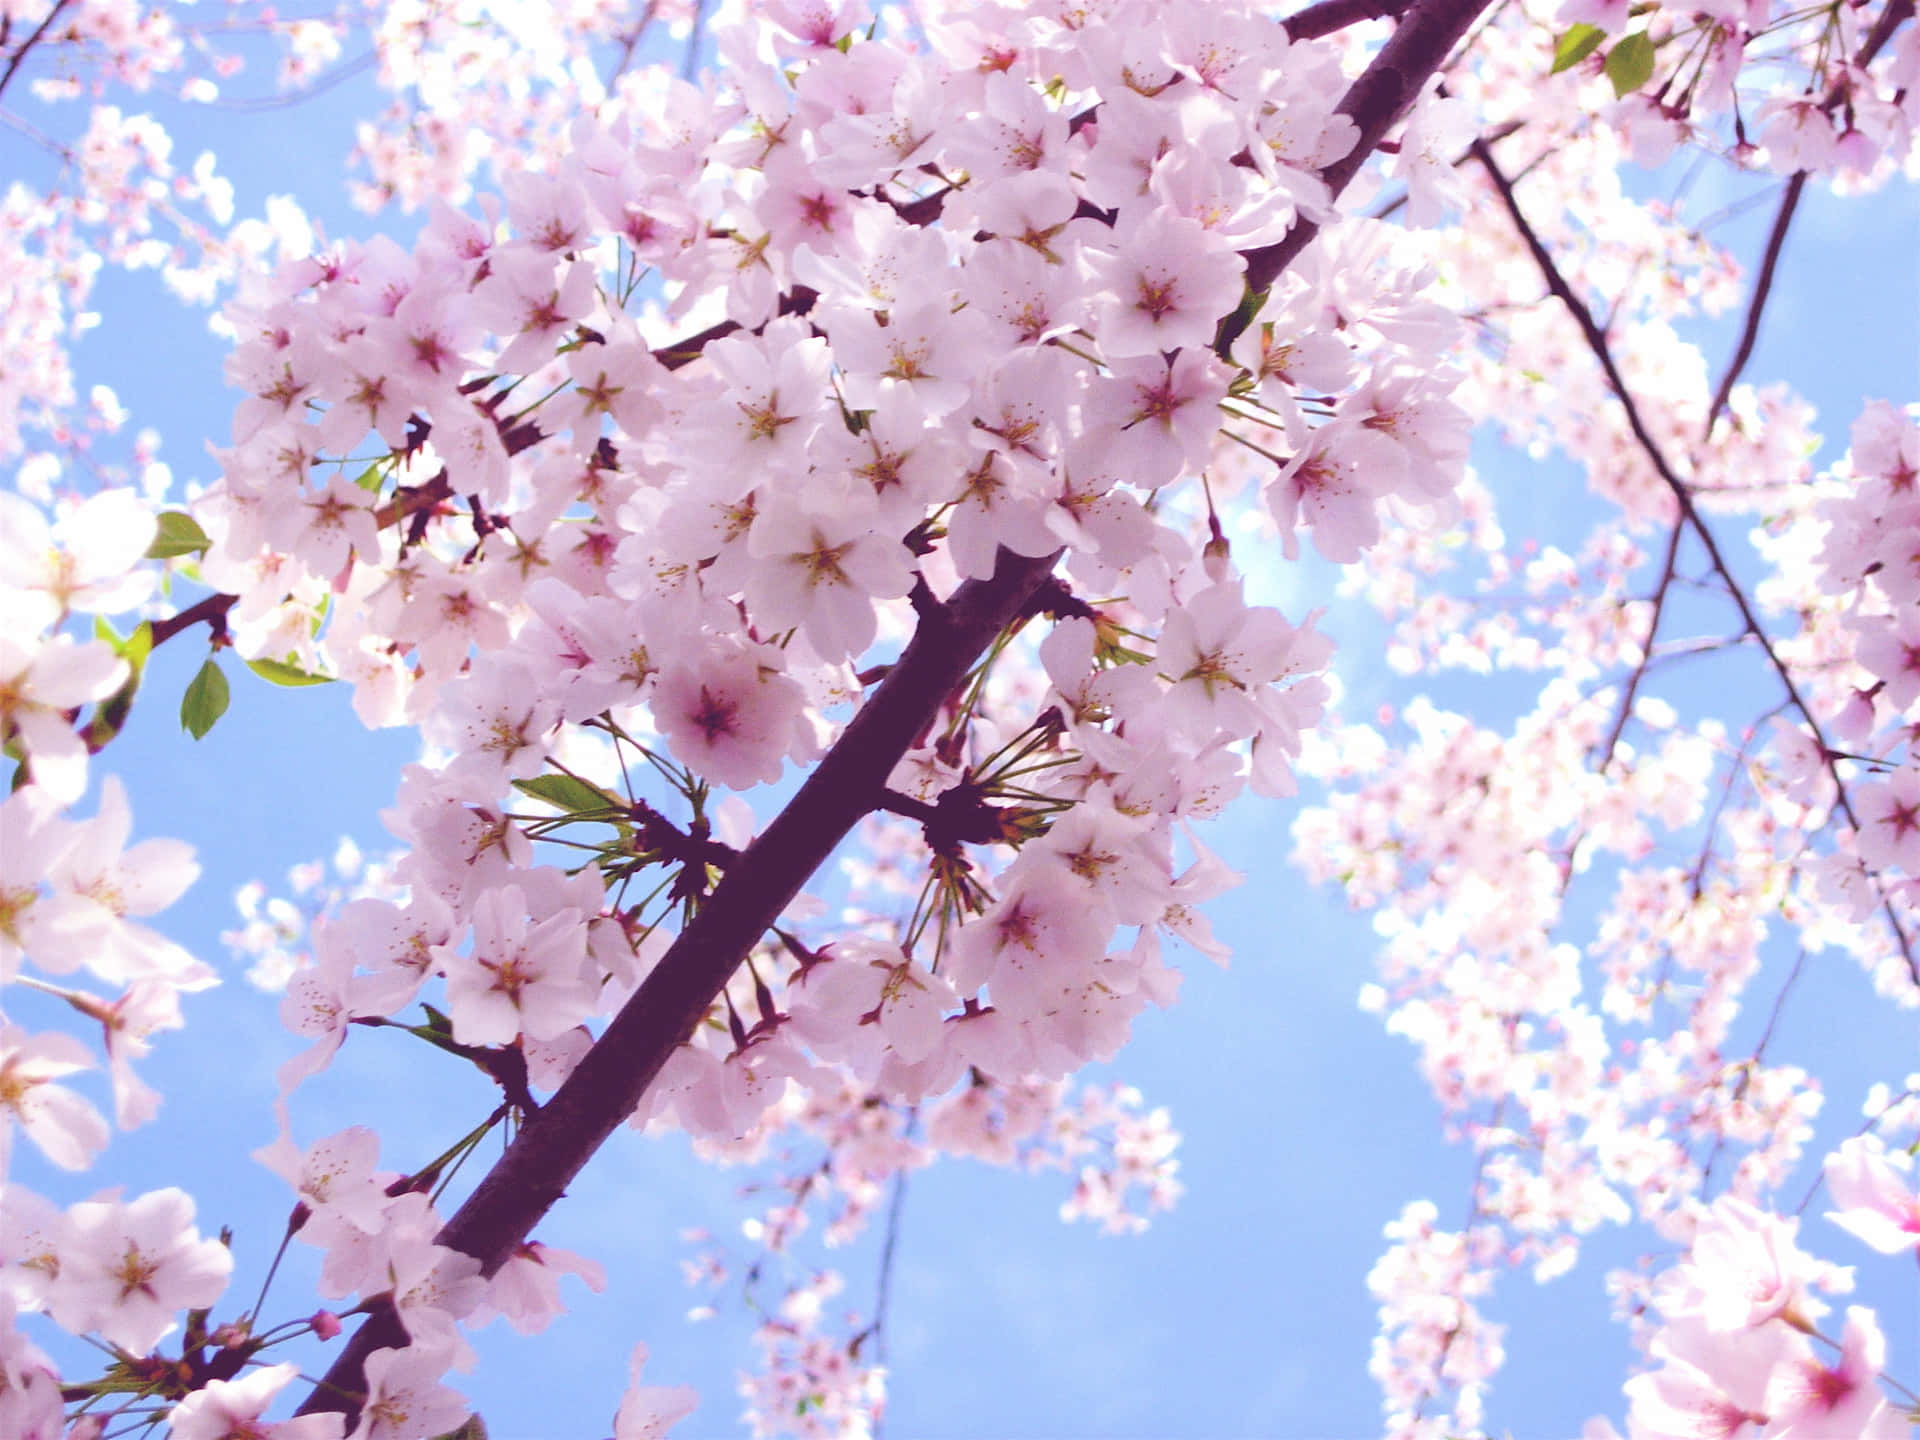 Capture spring's joy with the beauty of sakura blossom Wallpaper